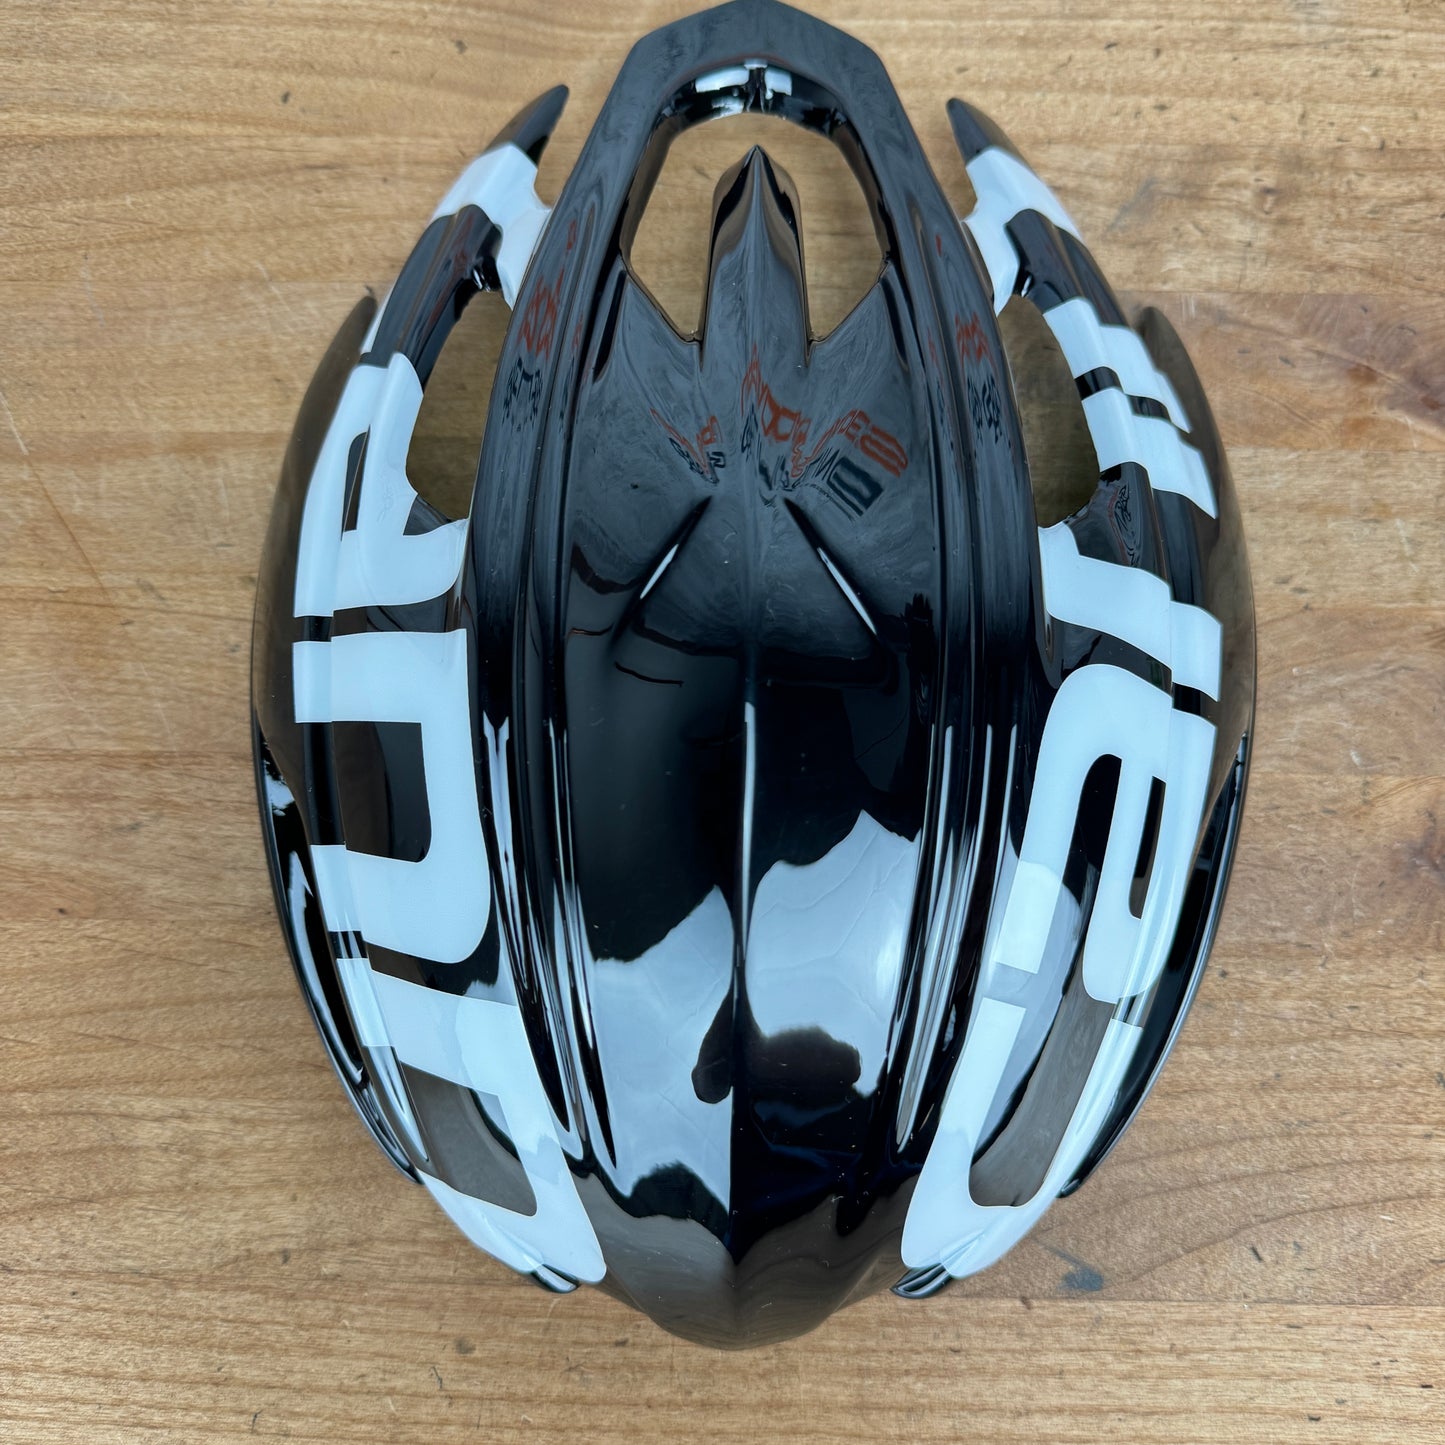 New! Cannondale Cypher L-XL 58-62cm Aero Cycling Helmet Black